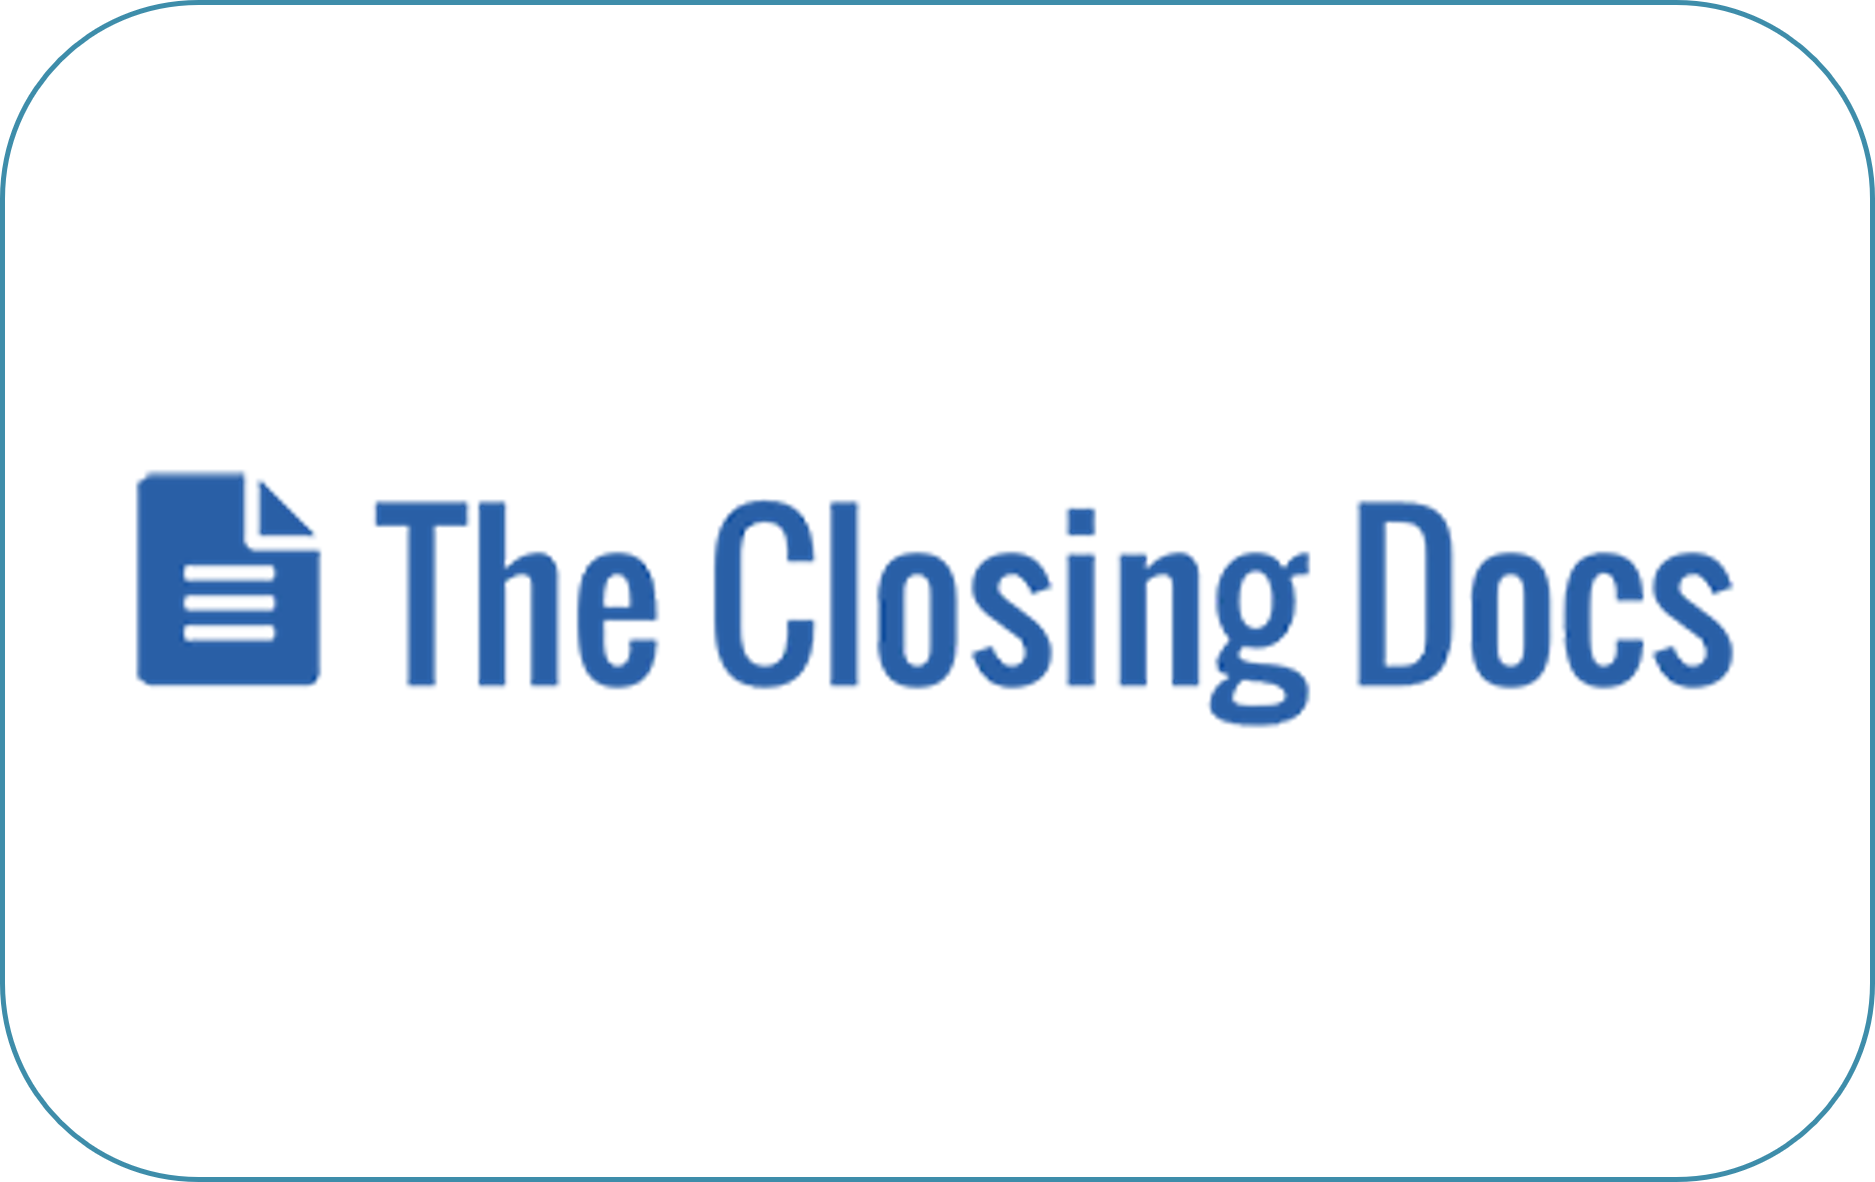 The Closing Docs logo